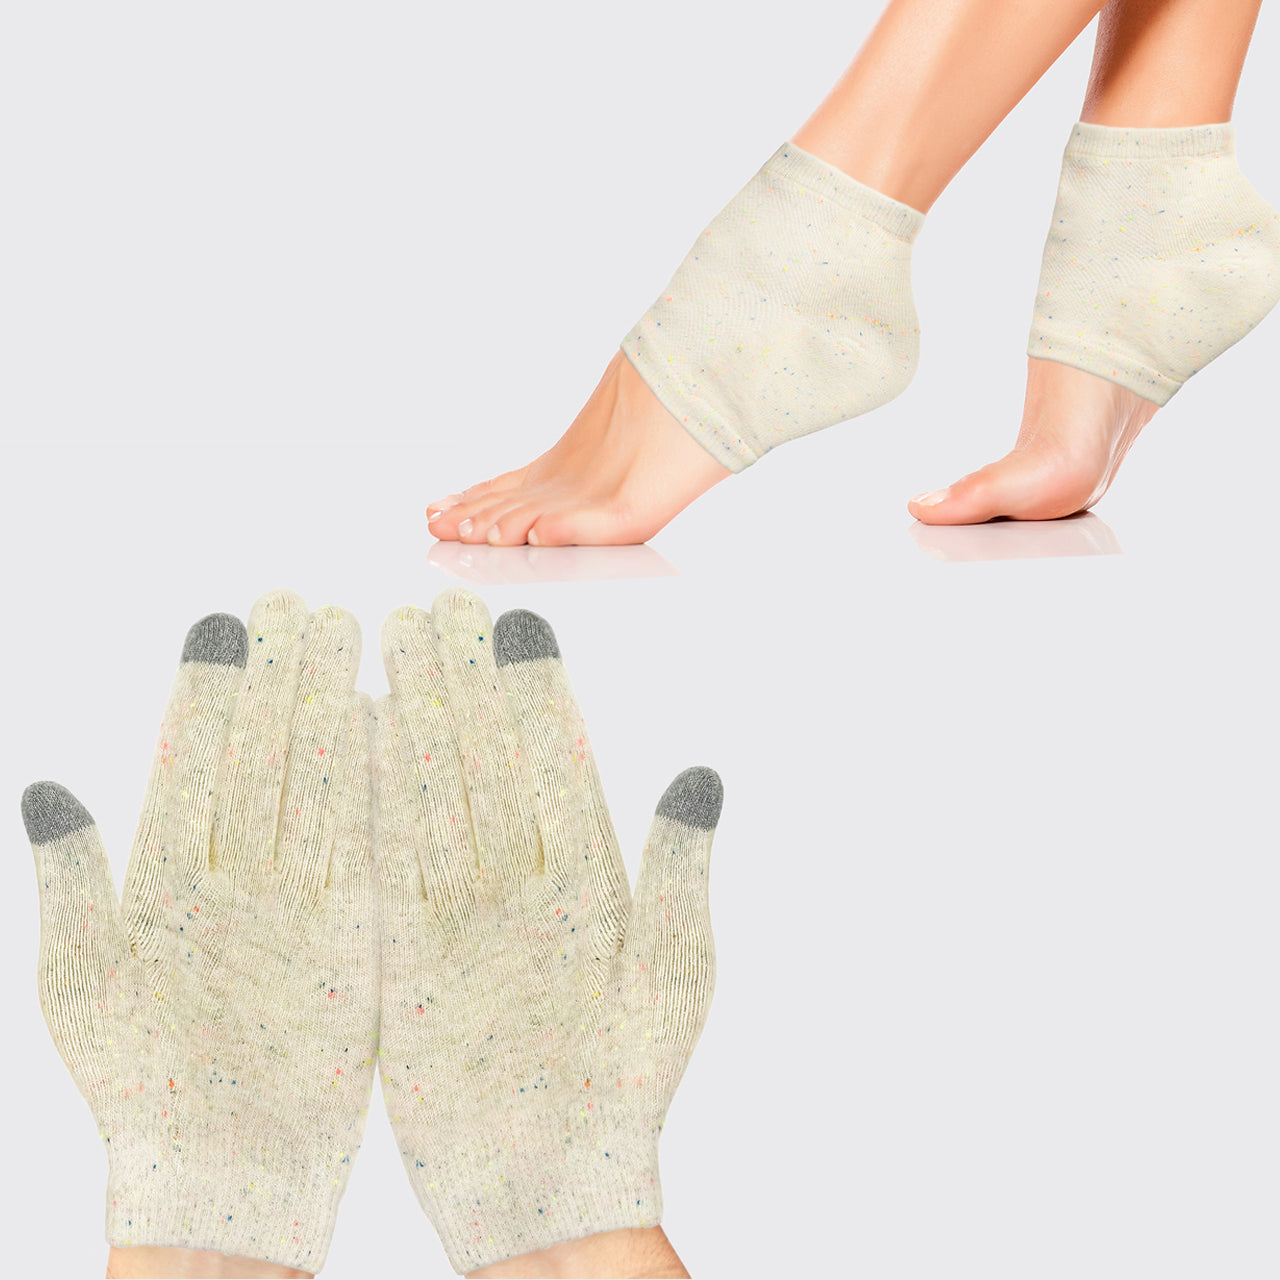 Kitsch Moisturizing Spa Socks & Gloves Bundle Hydrates, Softens & Protects